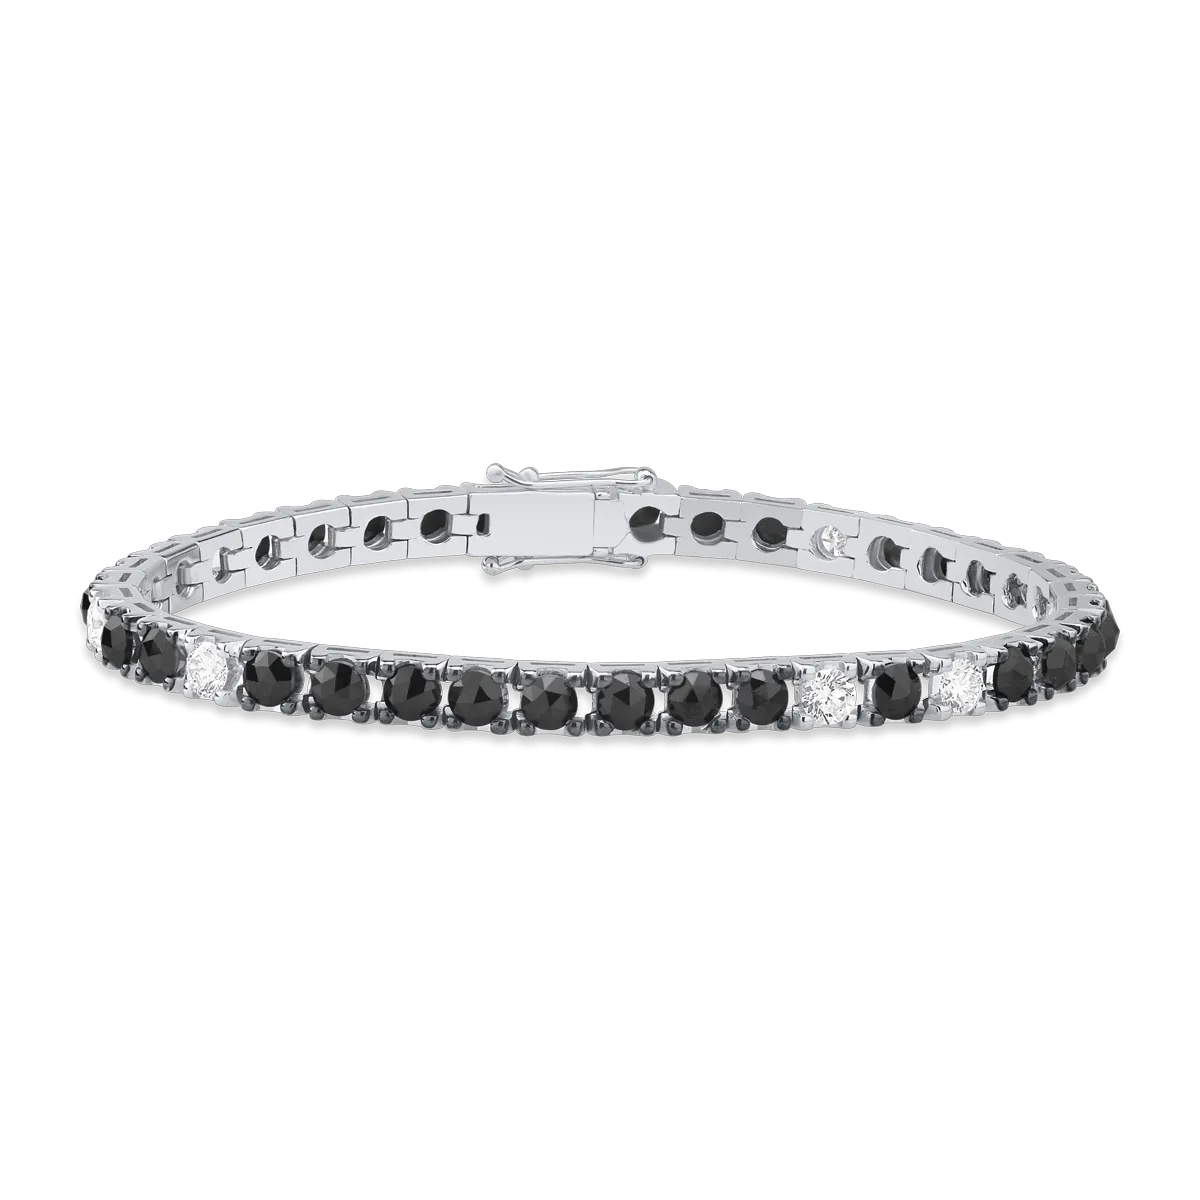 18K white gold tennis bracelet with 1.45ct white diamonds and 9.2ct black diamonds